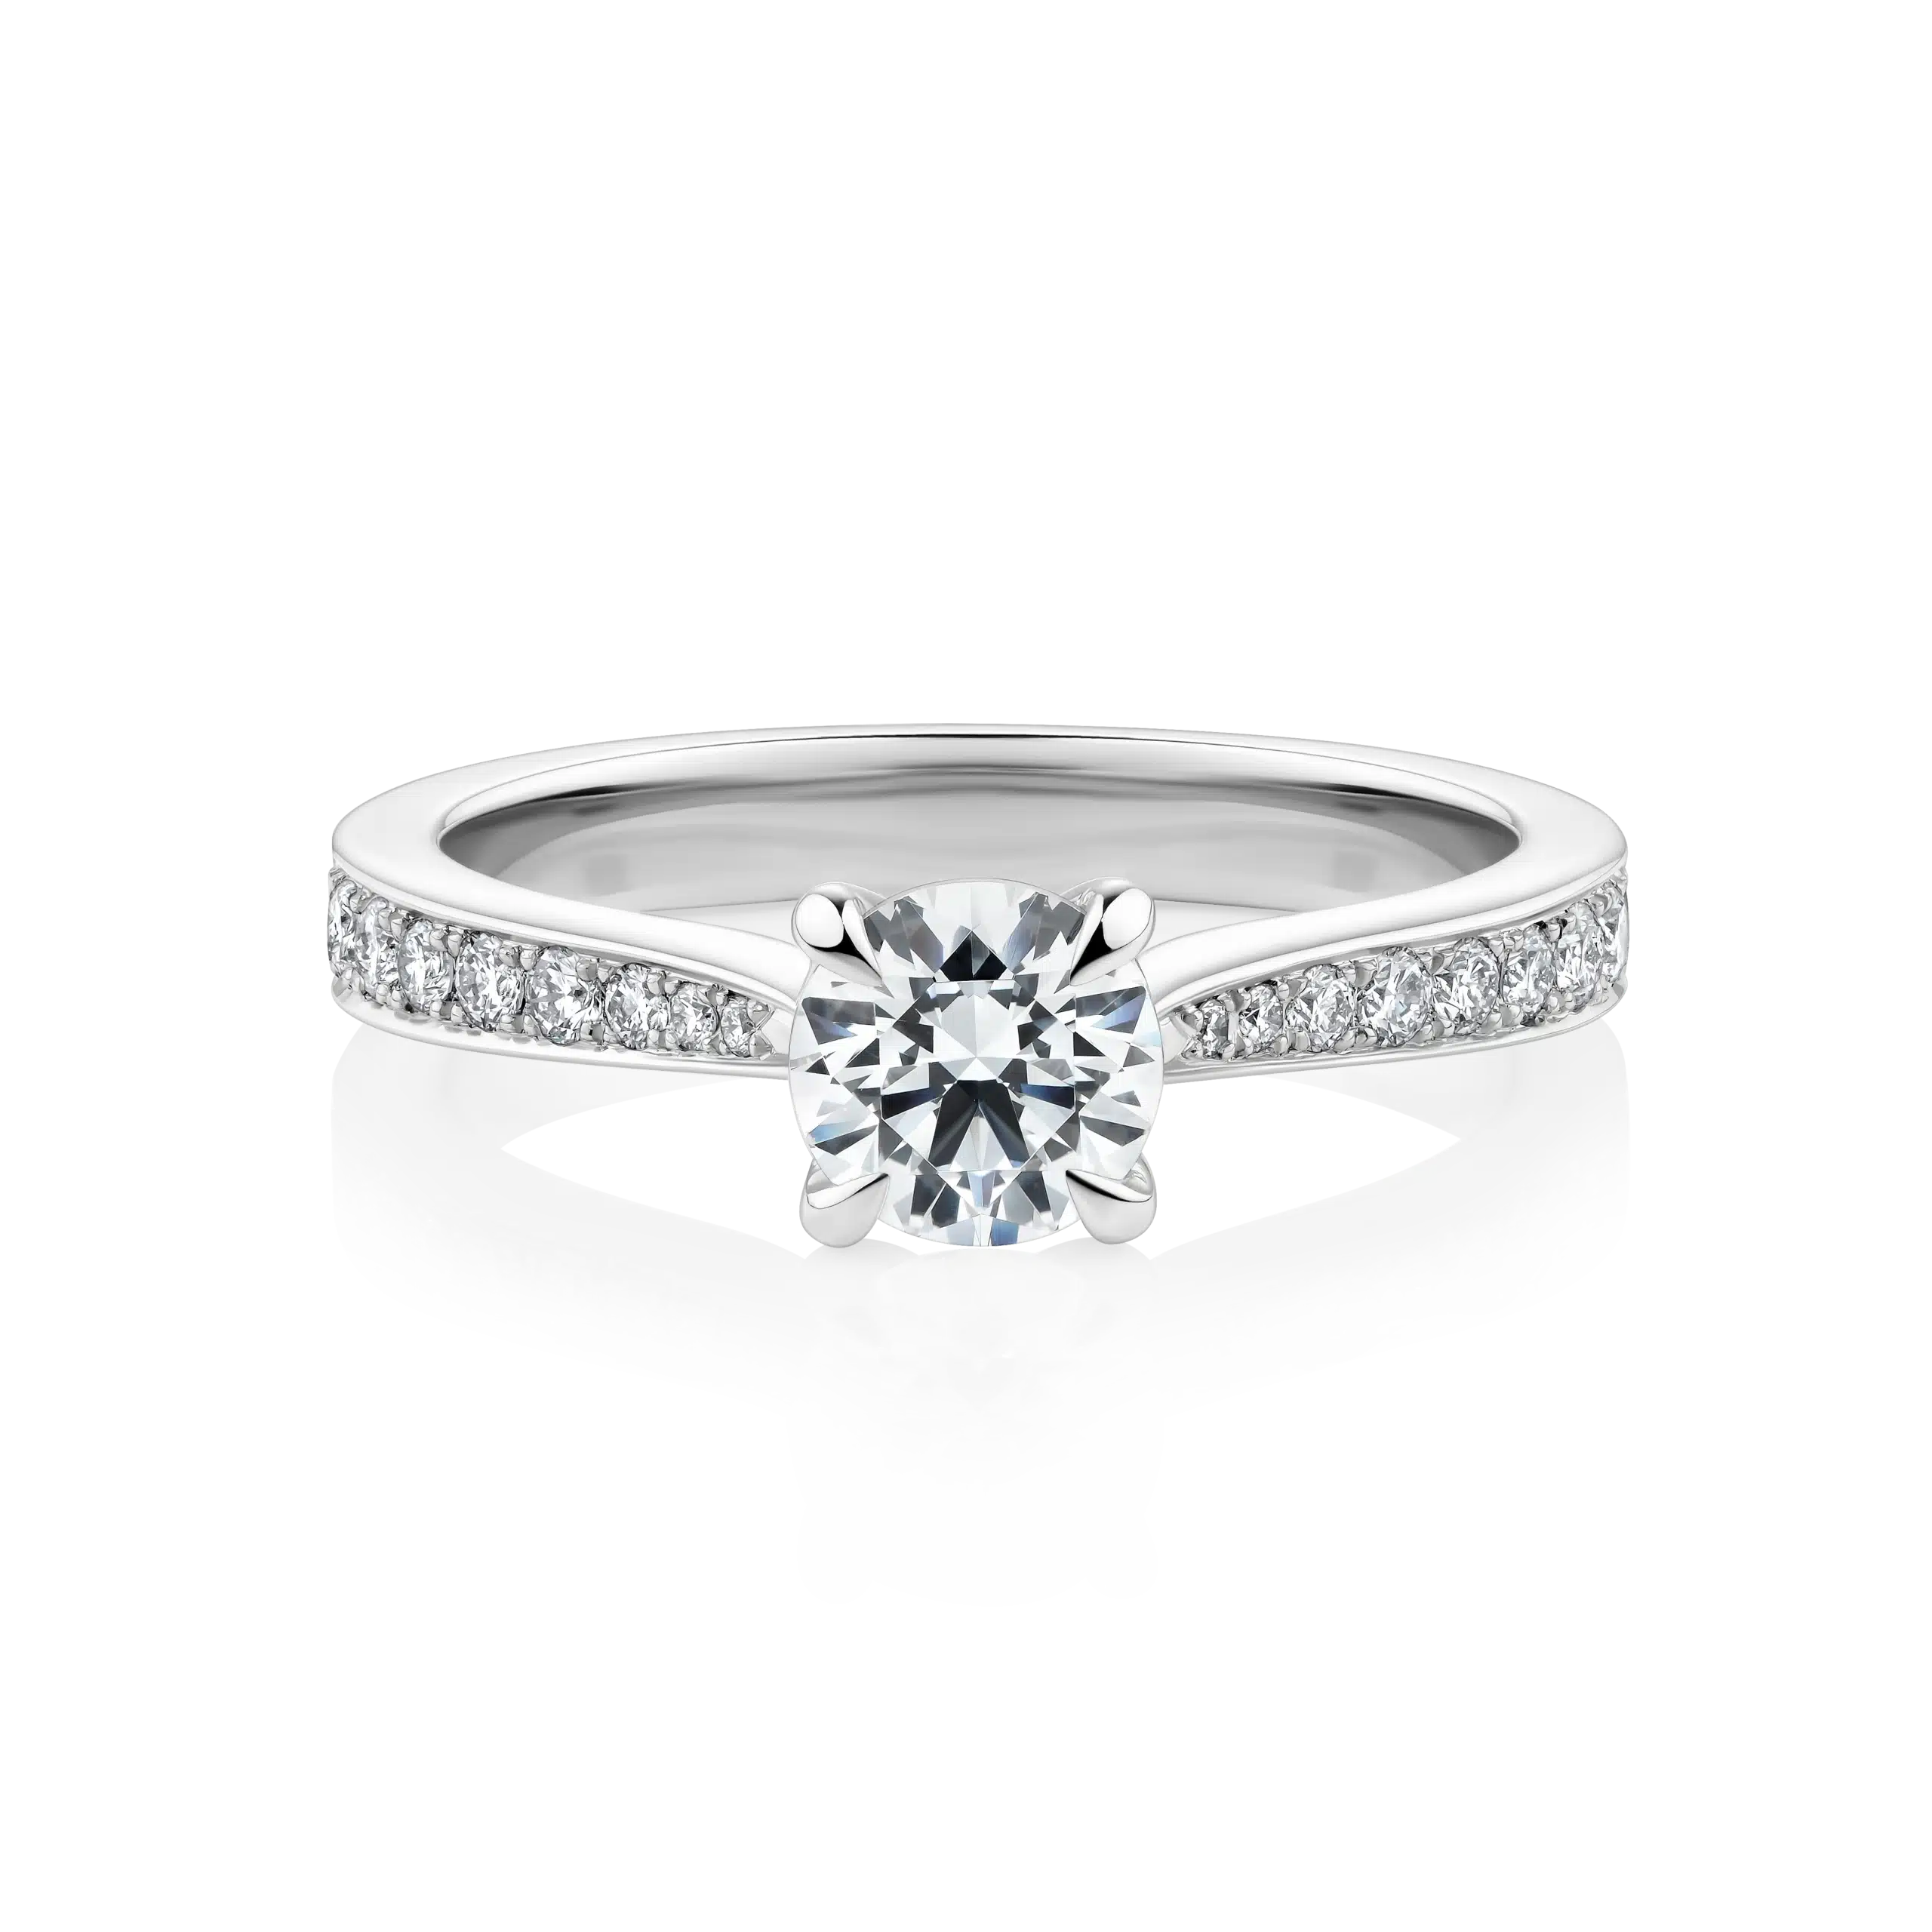 Acacia-White-Gold-Round-4-claw-Grain-Set-Diamond-Engagement-Ring